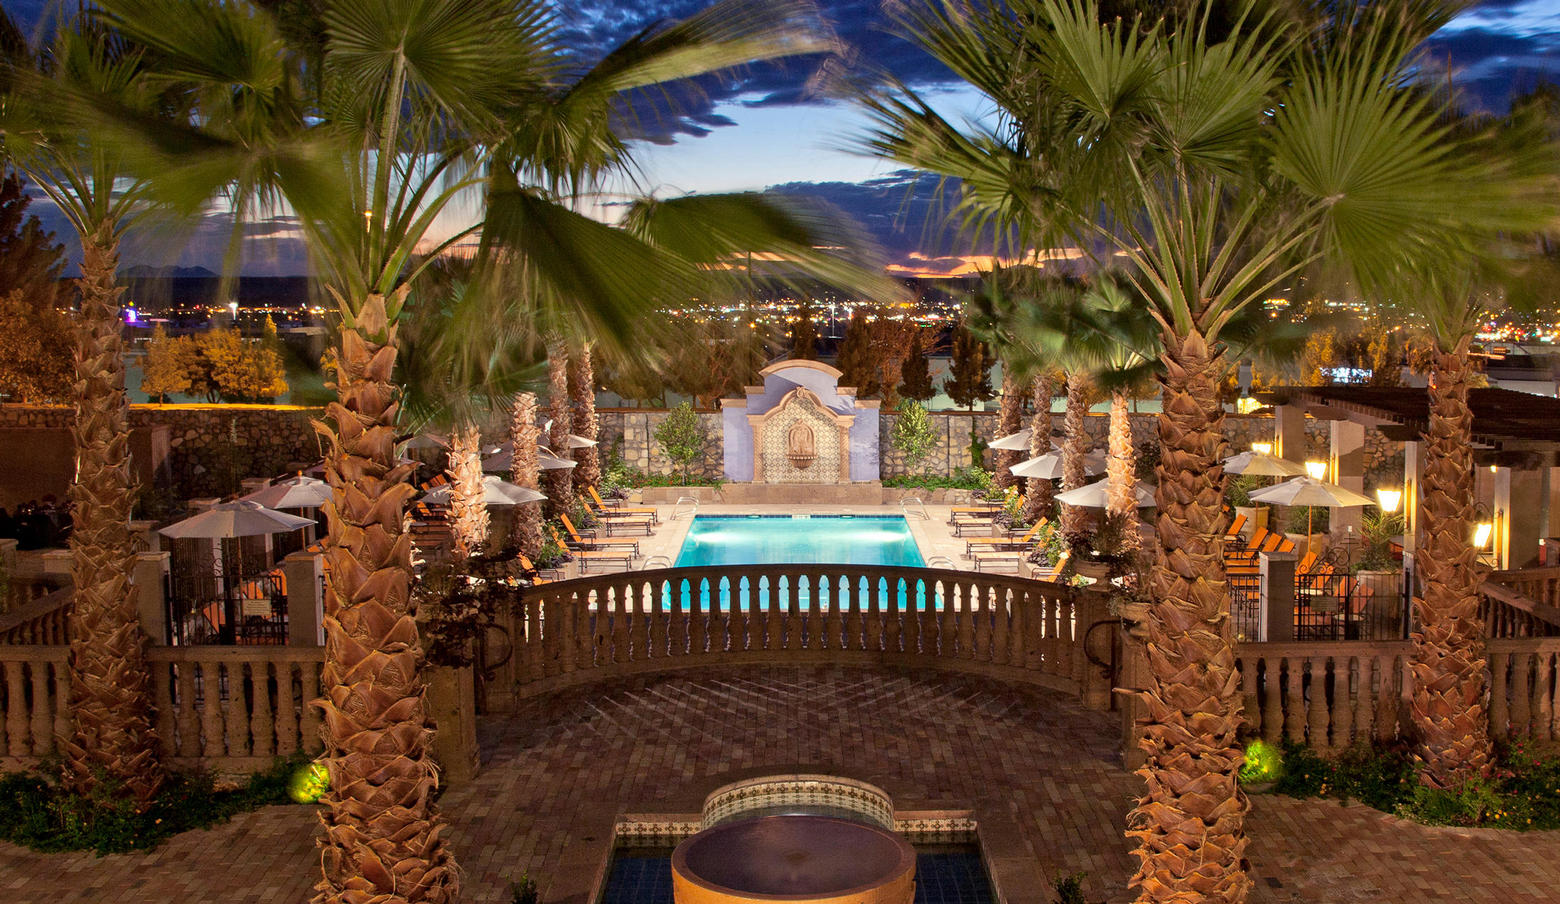 Hotel Encanto pool